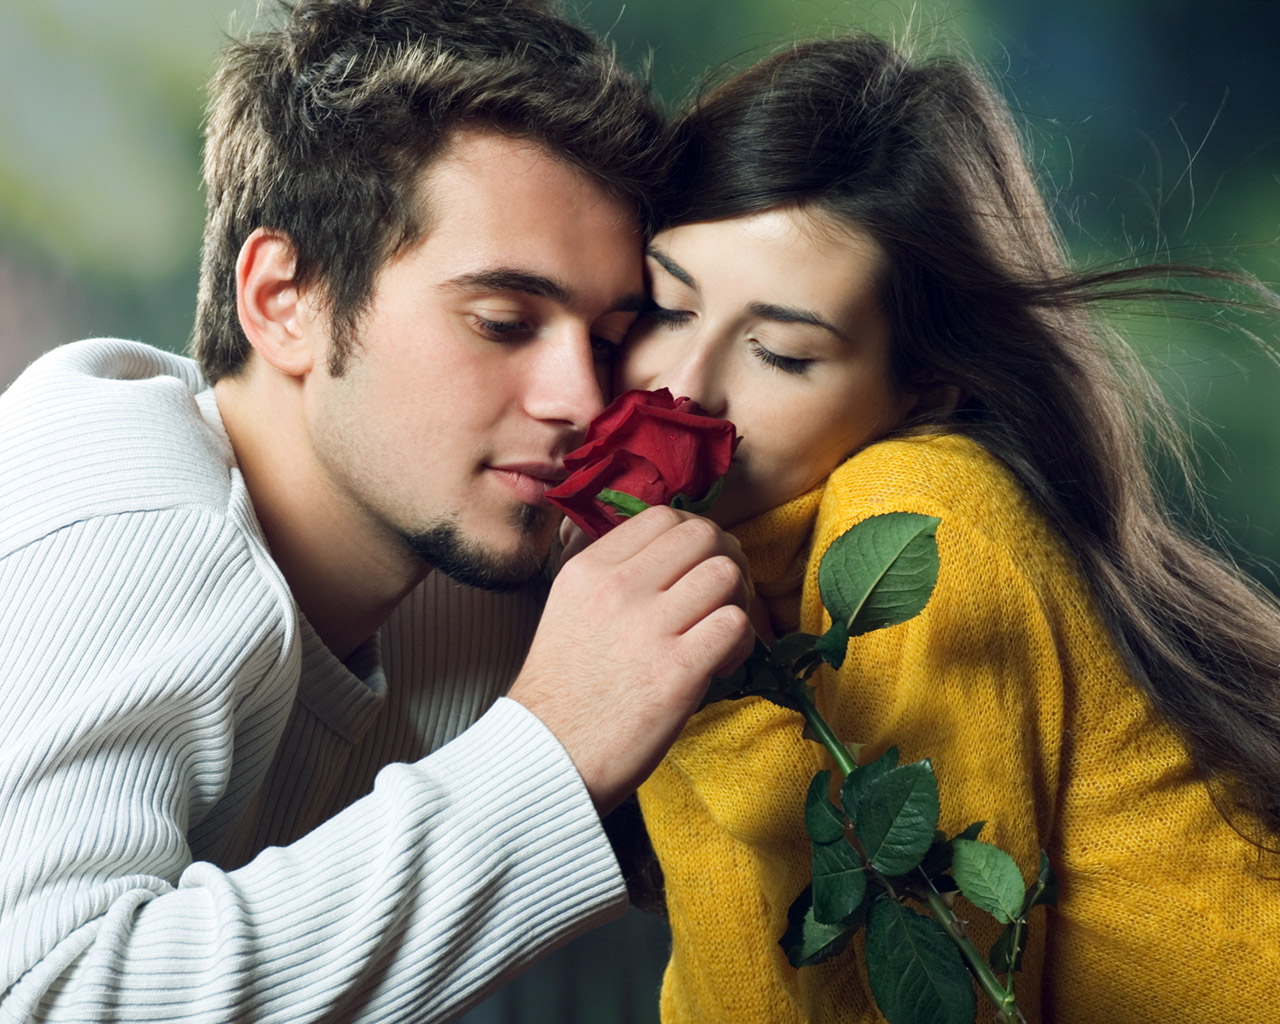 Hug - Romantic Couple , HD Wallpaper & Backgrounds